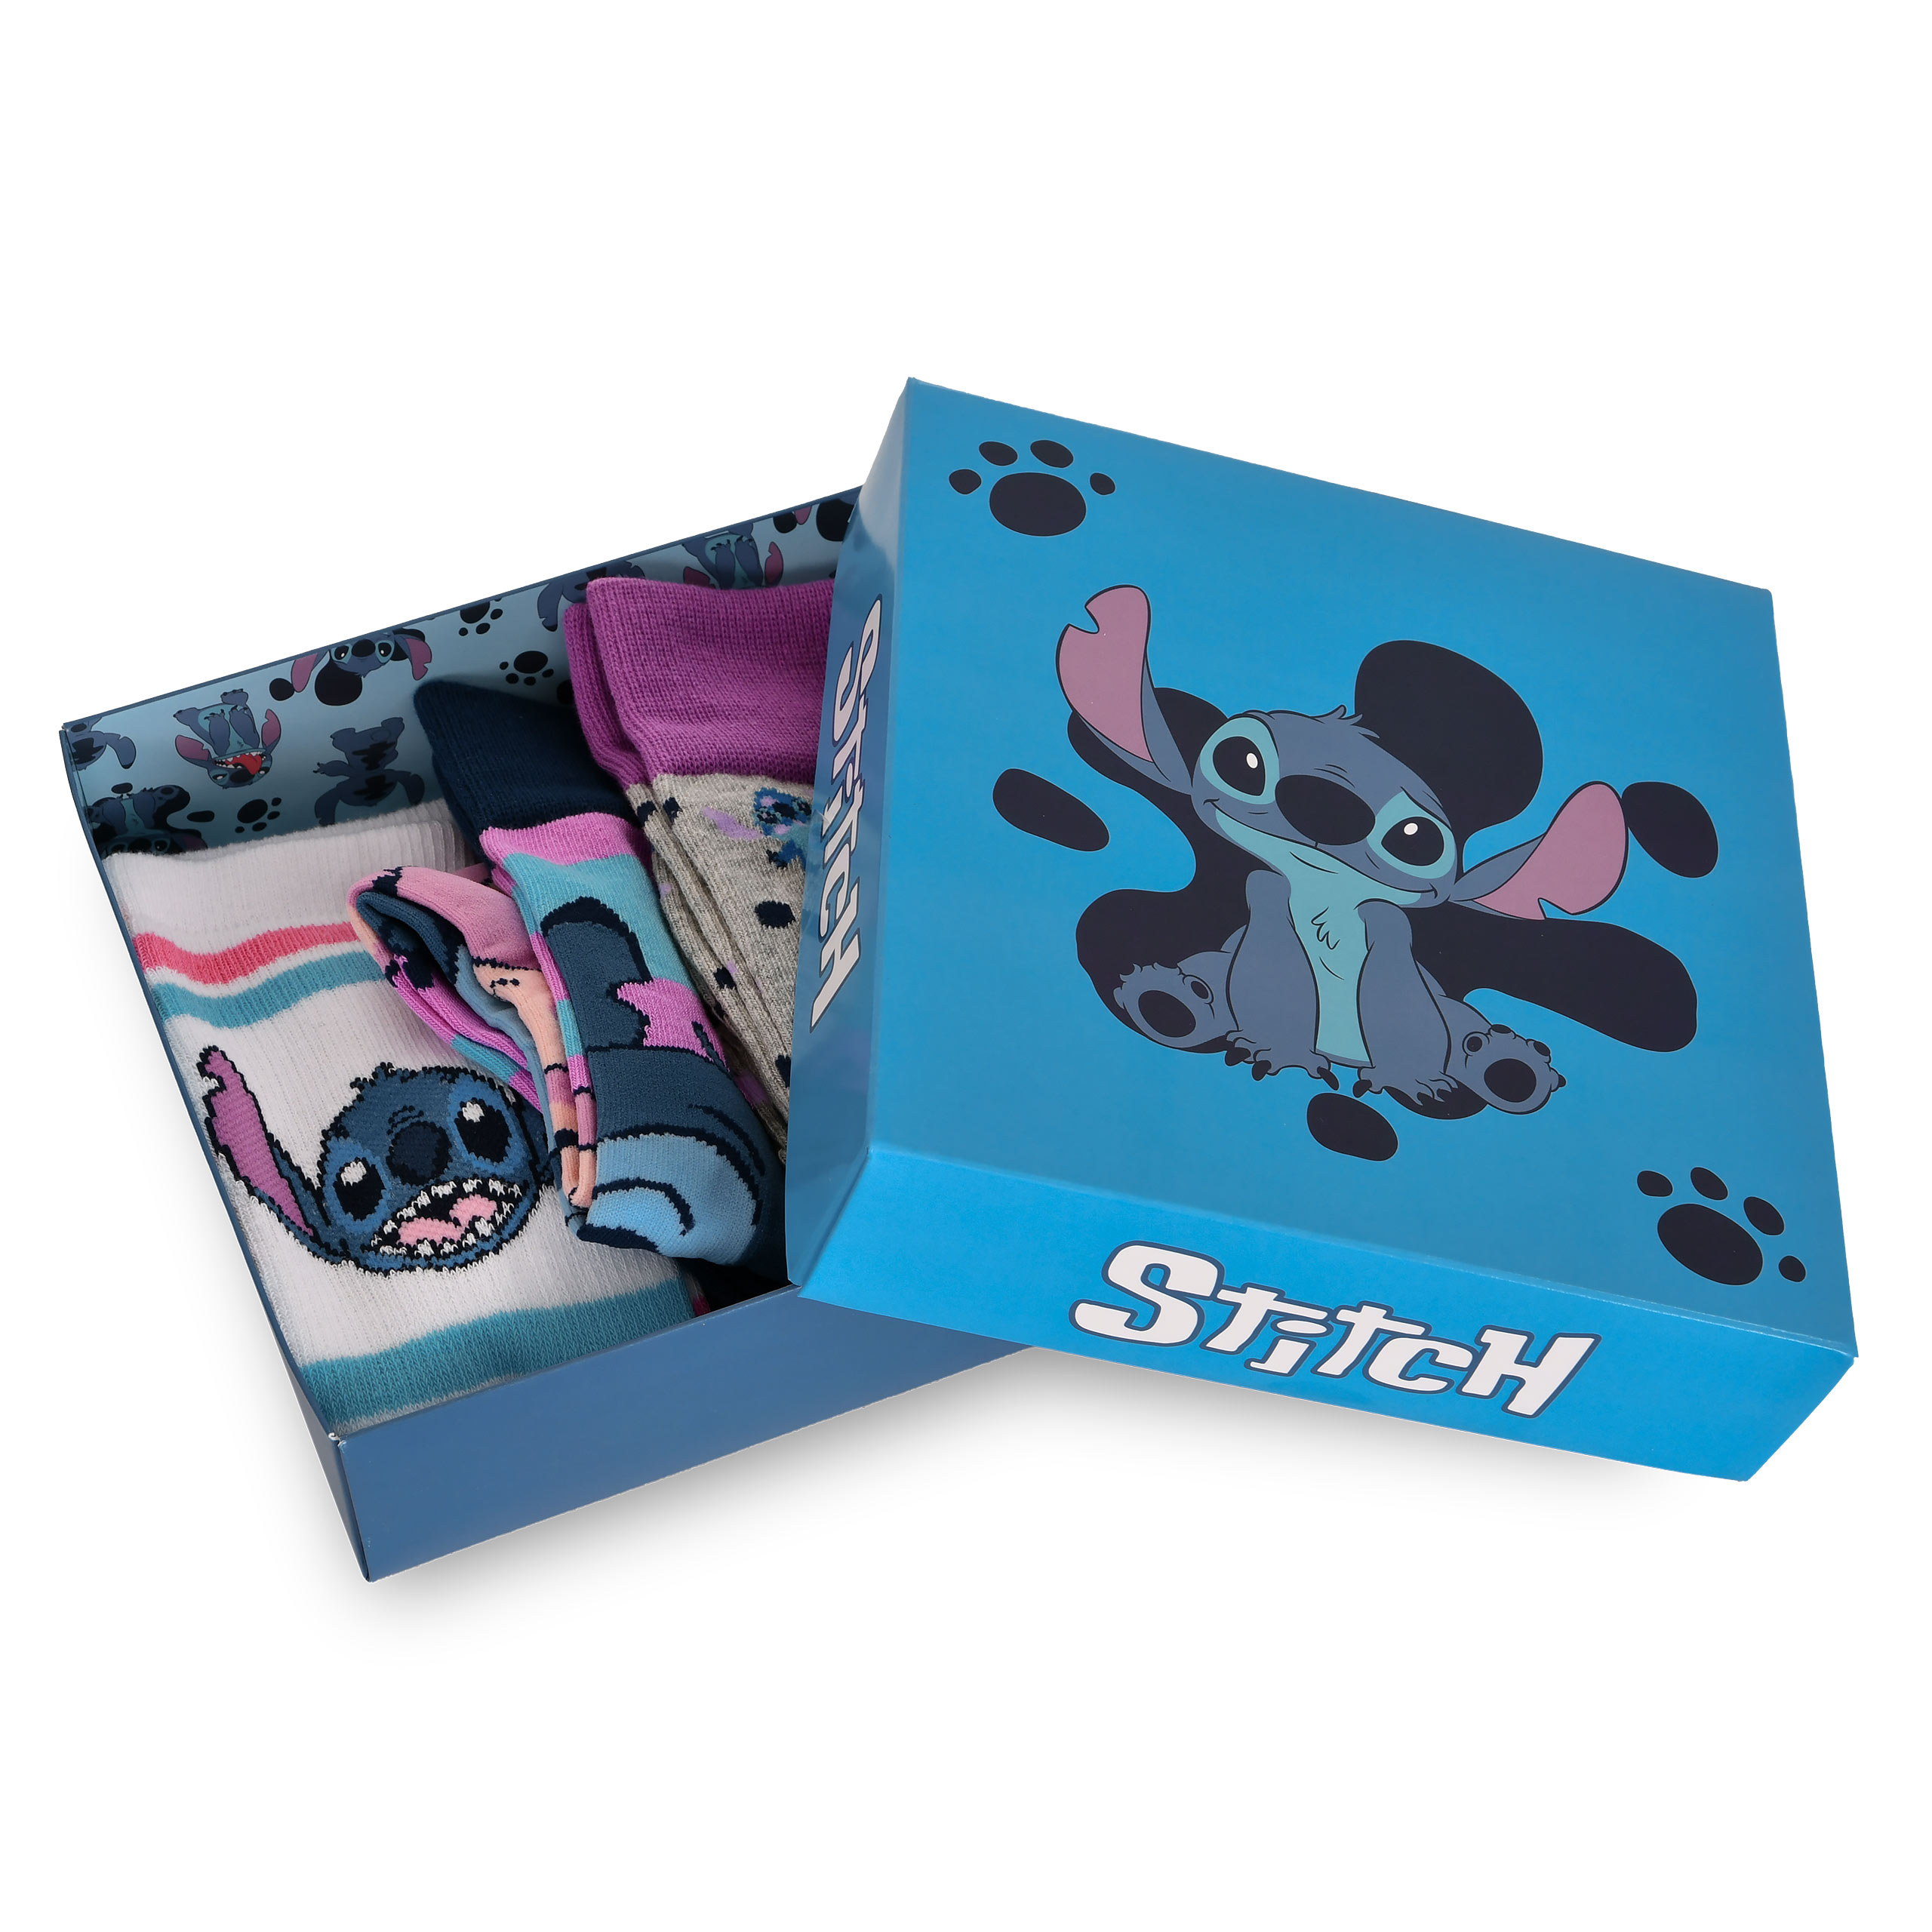 3-Pack of Lilo & Stitch ©Disney briefs